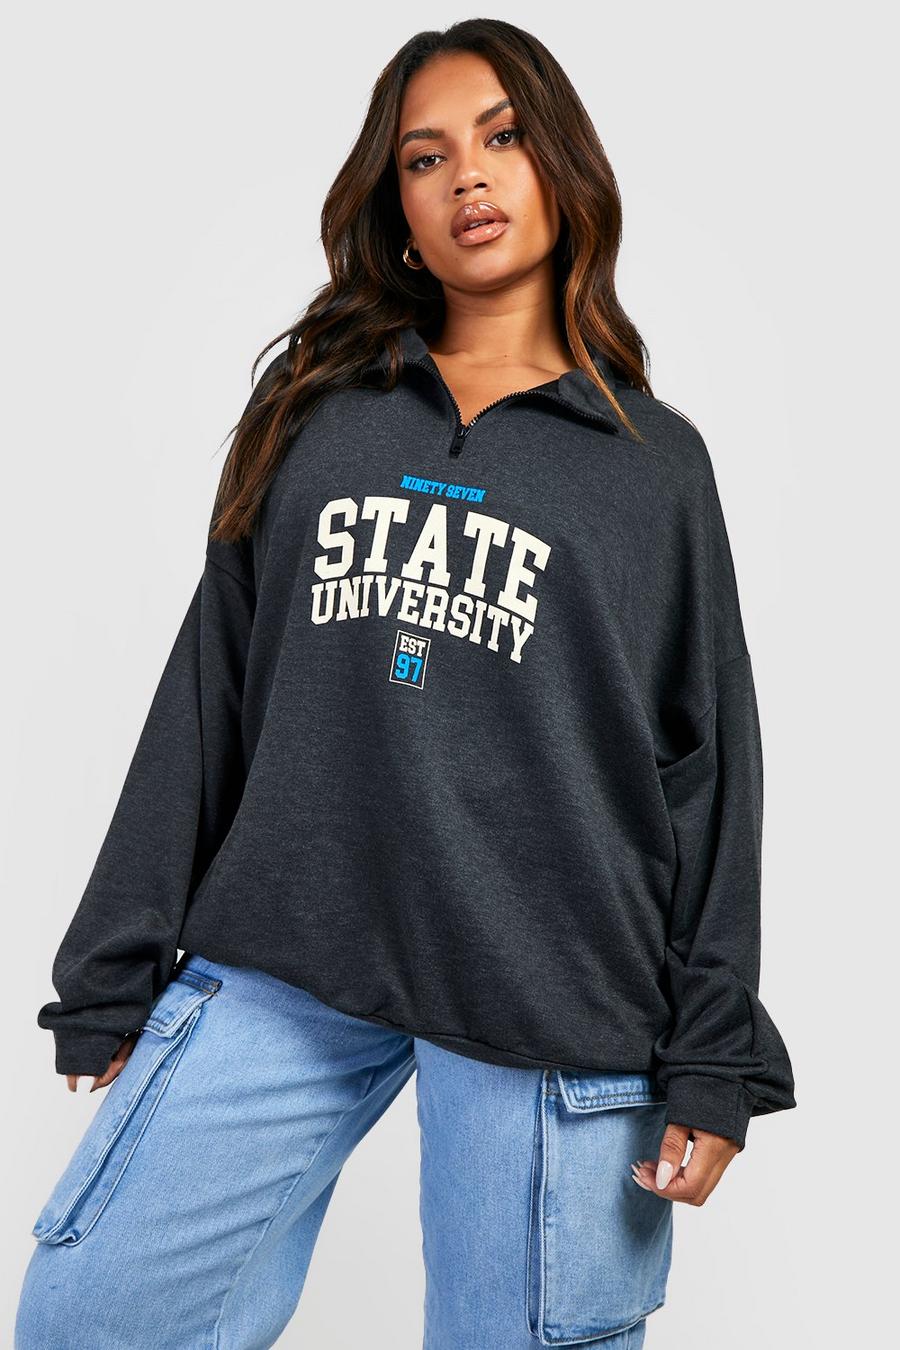 Plus Oversize State University Sweatshirt mit Reißverschluss, Charcoal gris